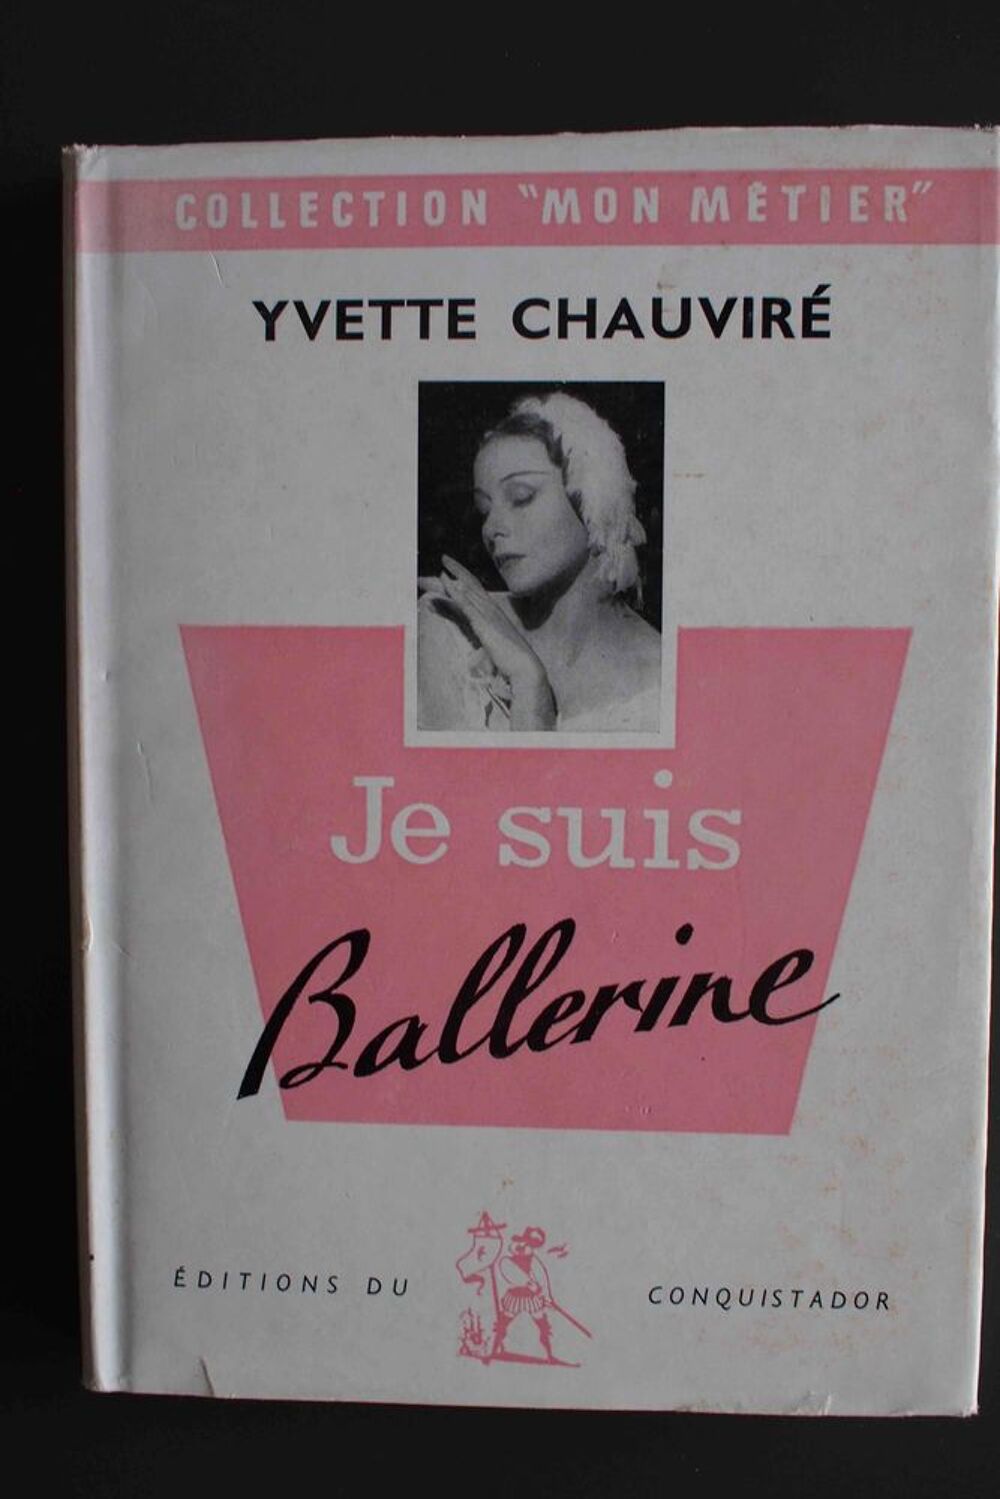 je suis ballerine - Yvette Chauvir&eacute; Livres et BD